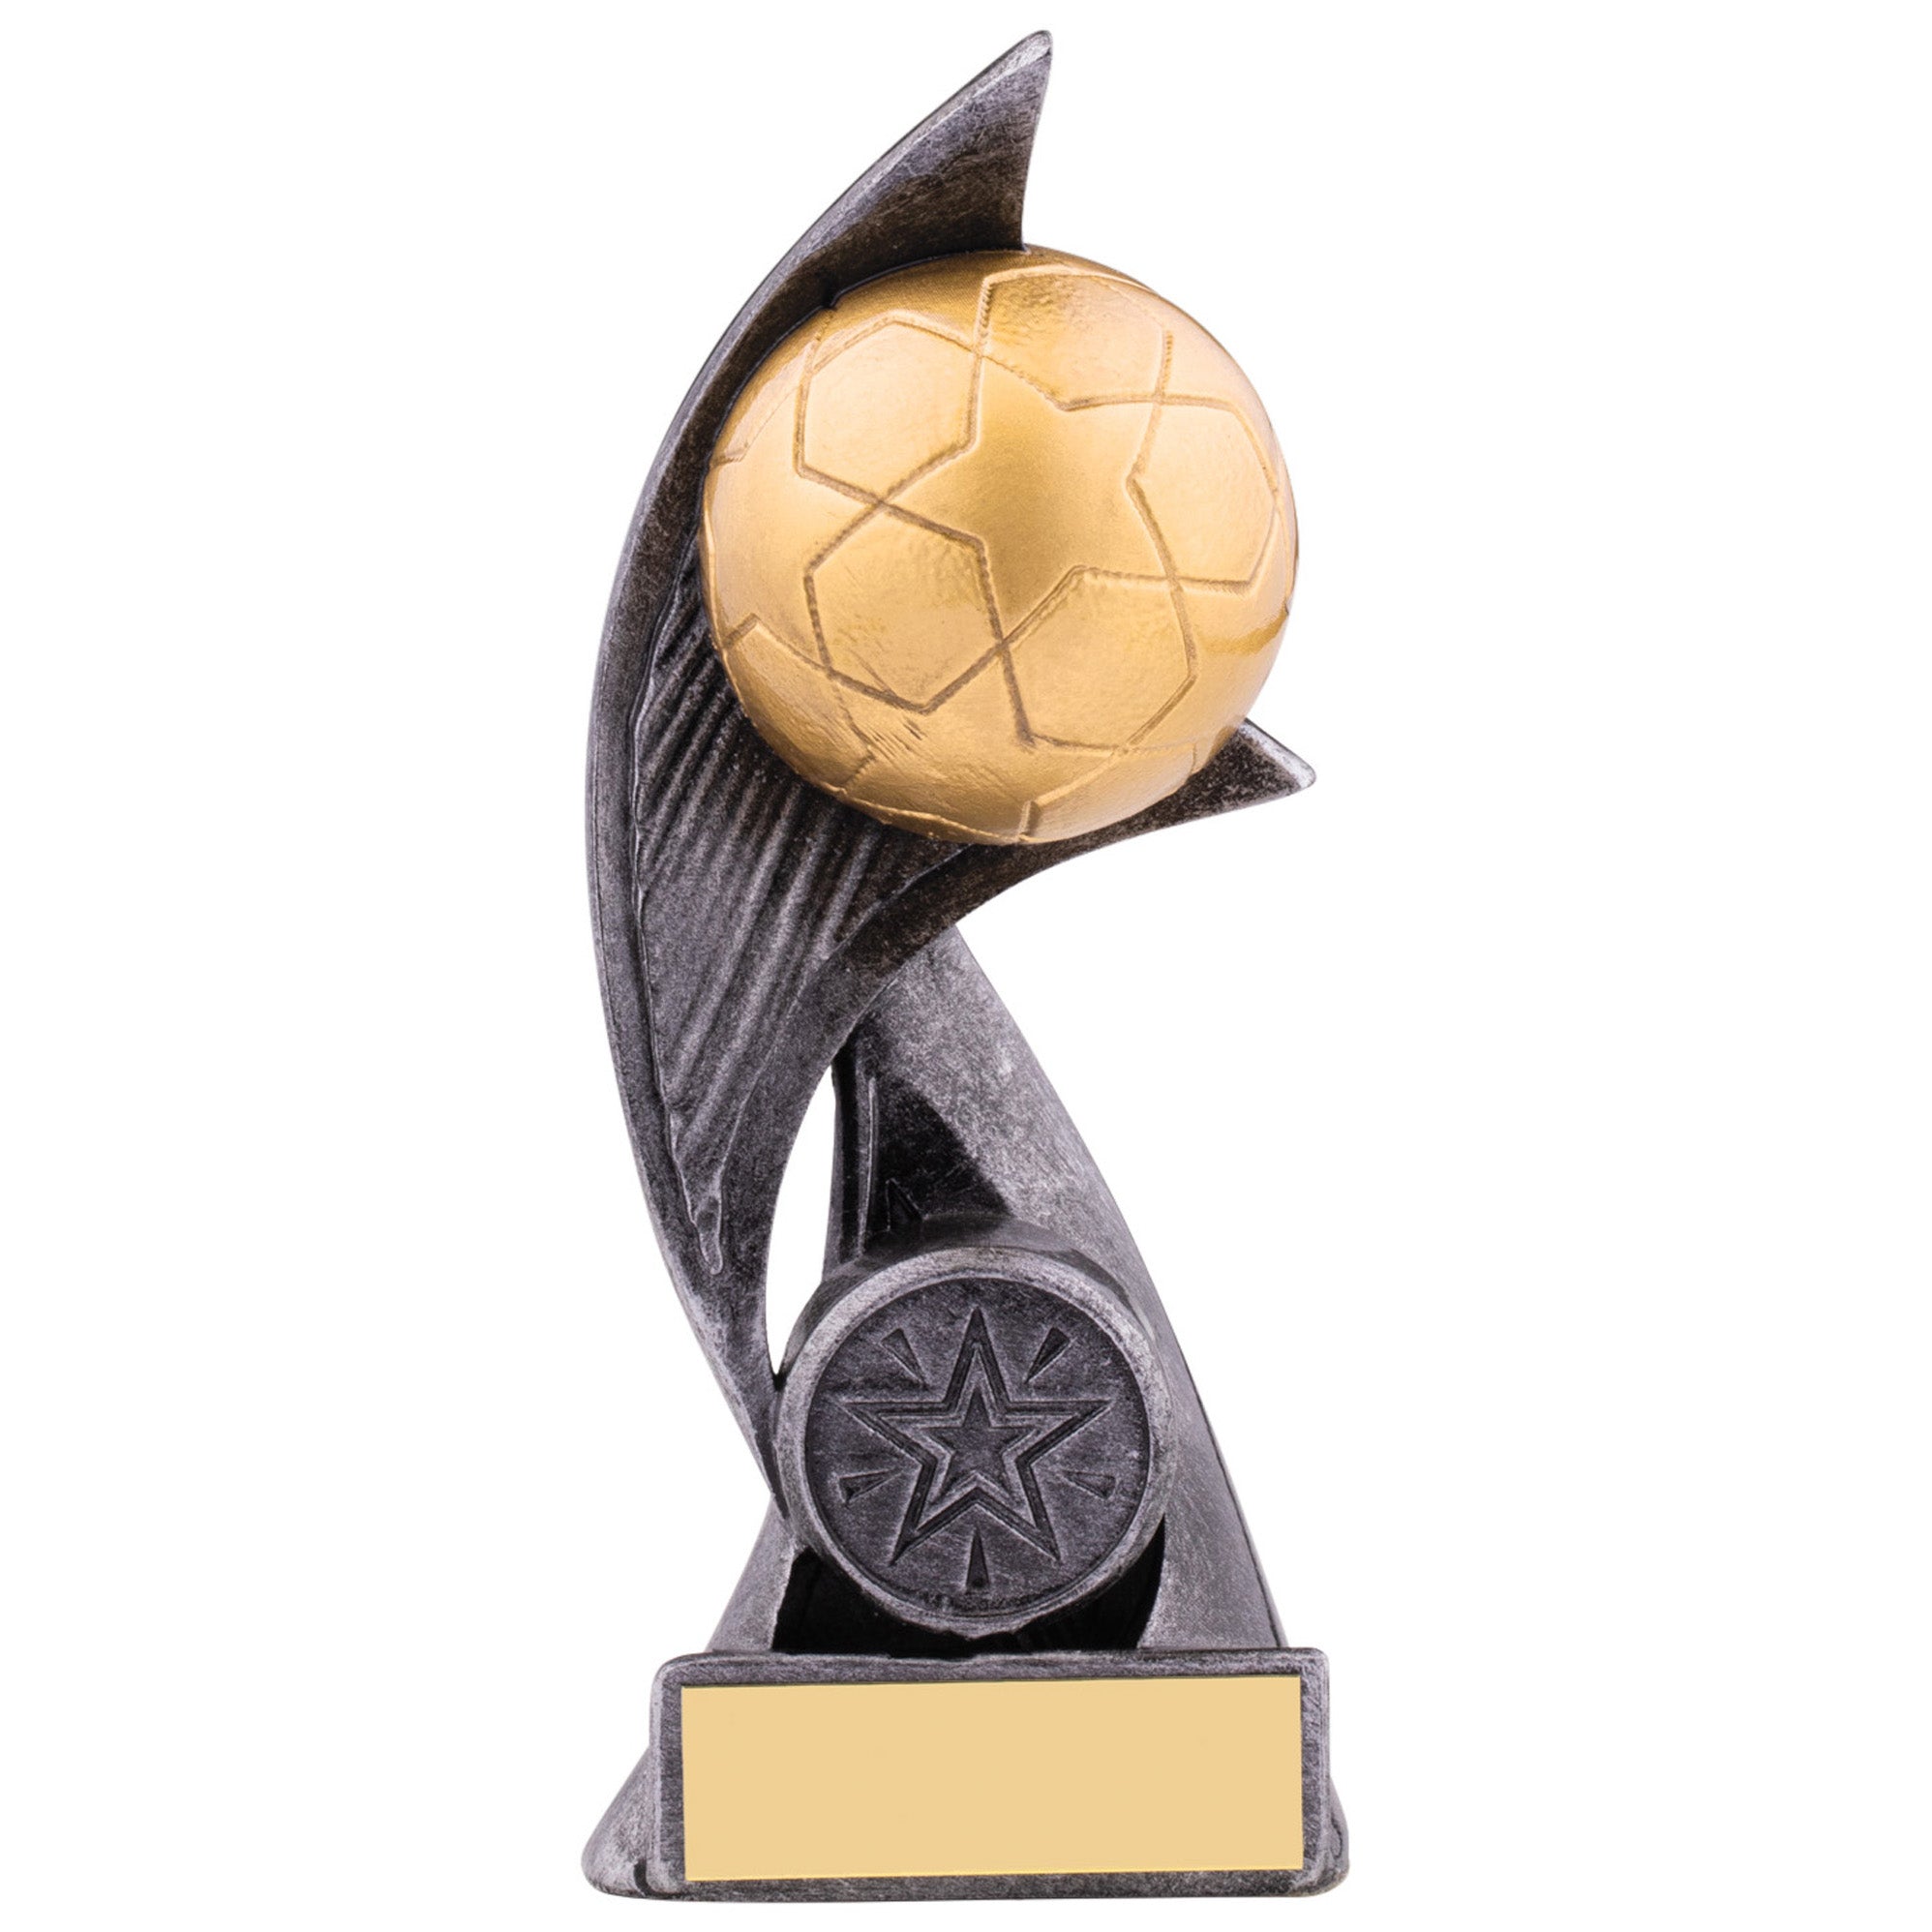 Aura Football Ball Award Gold/Silver (CLEARANCE)